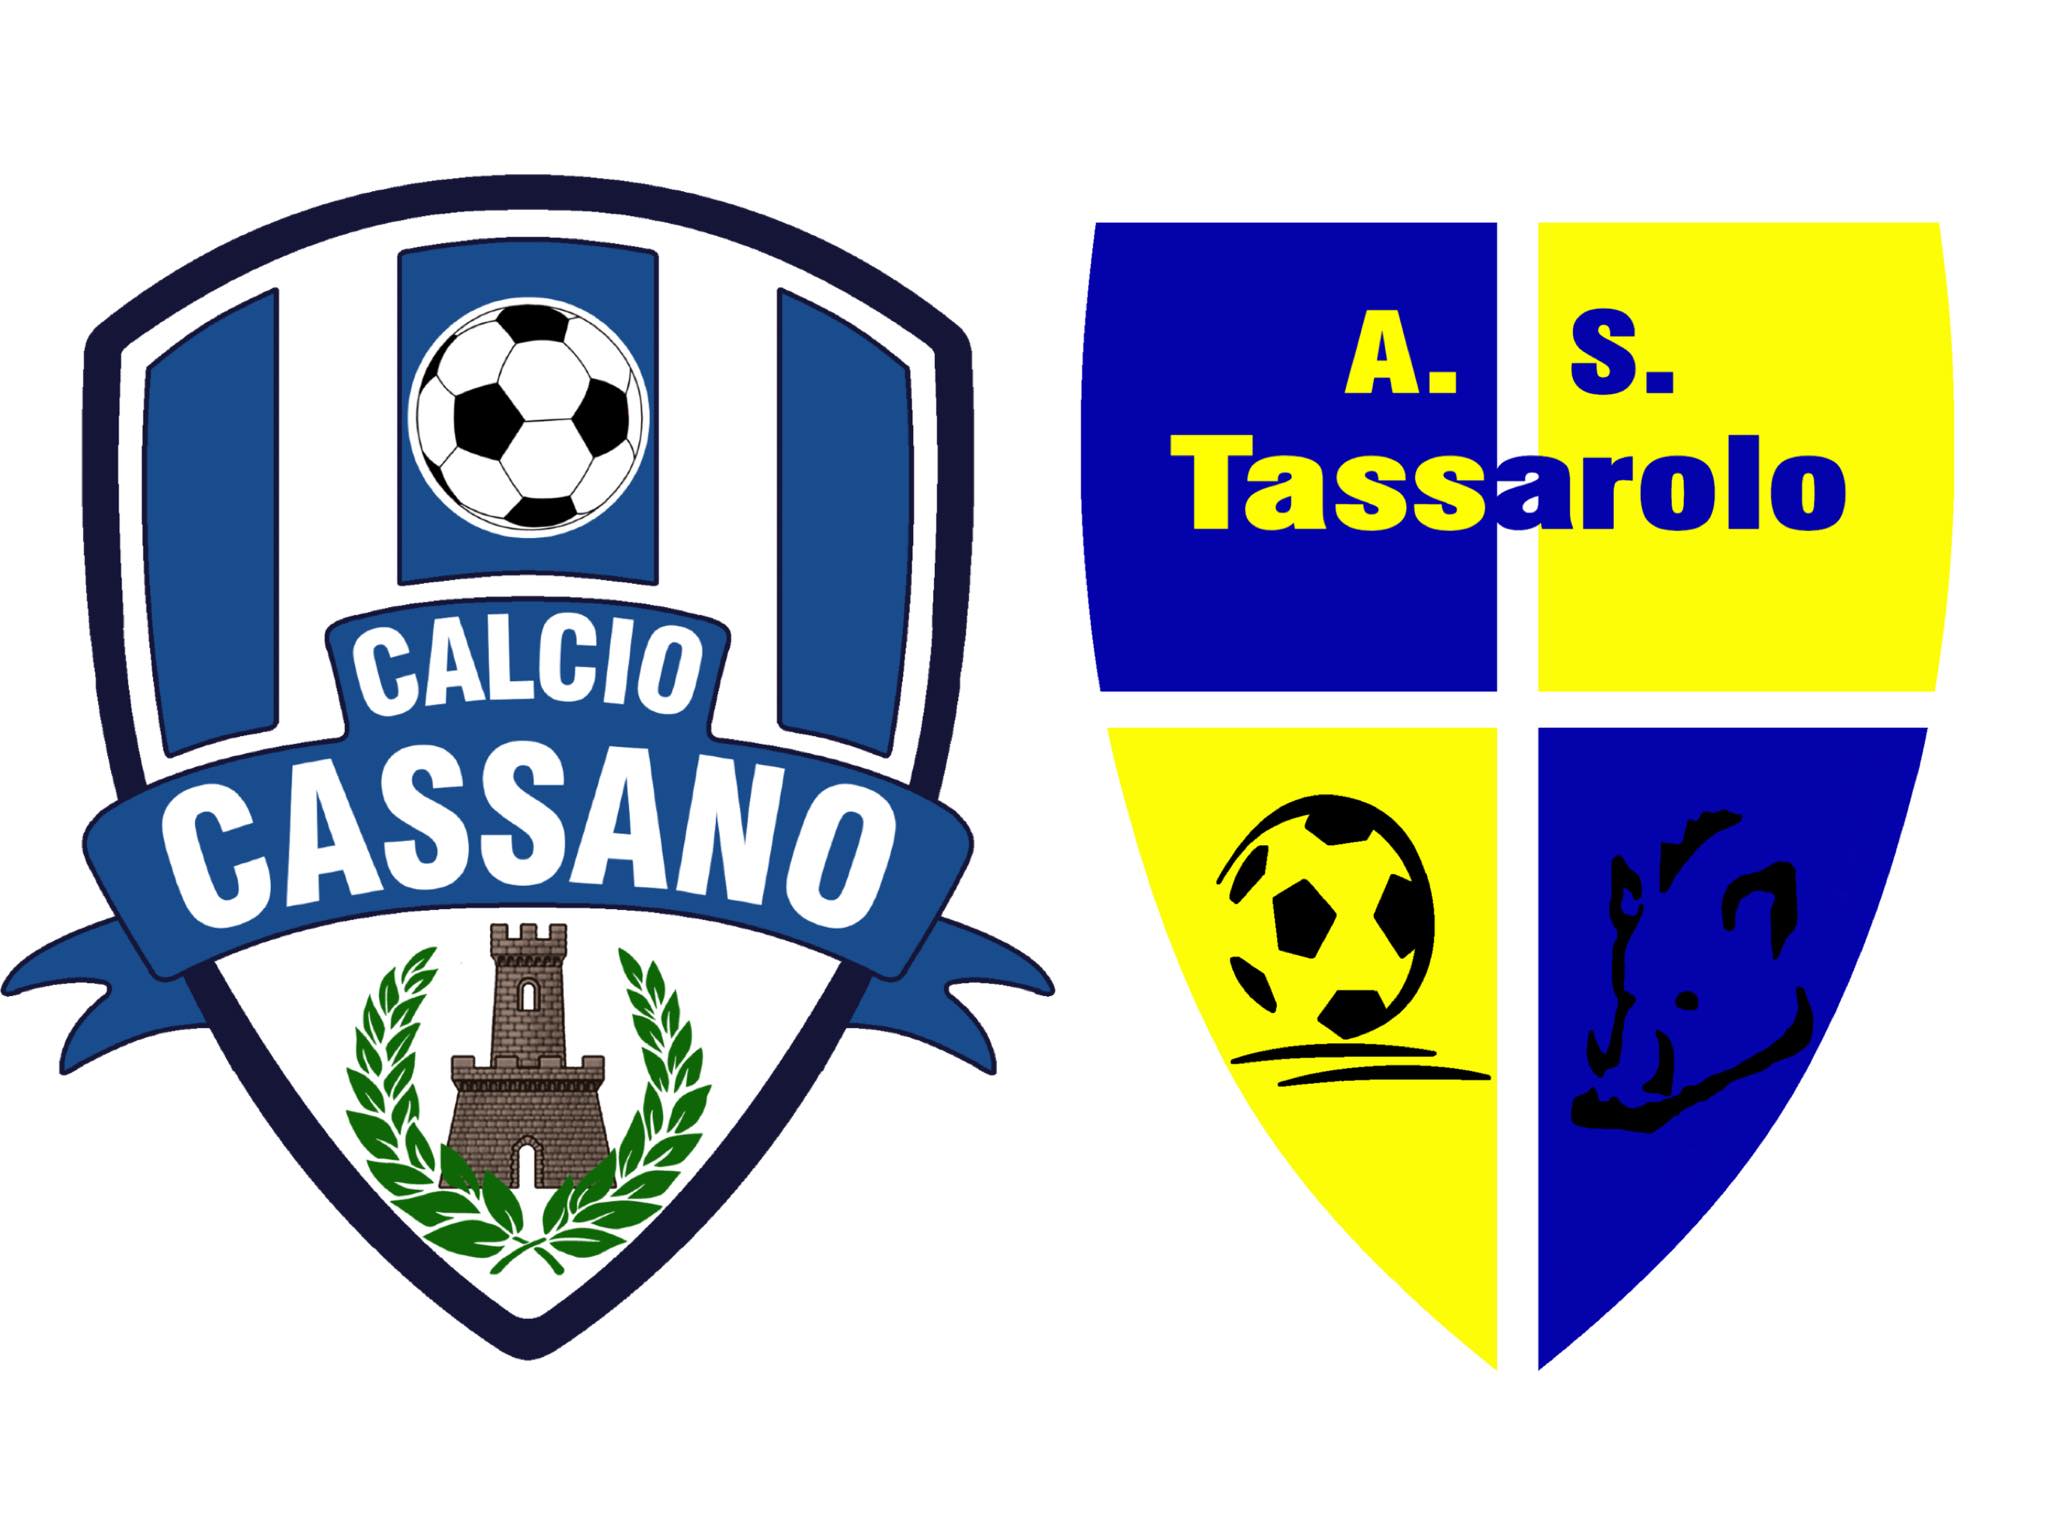 Salve Cassano e Tassarolo